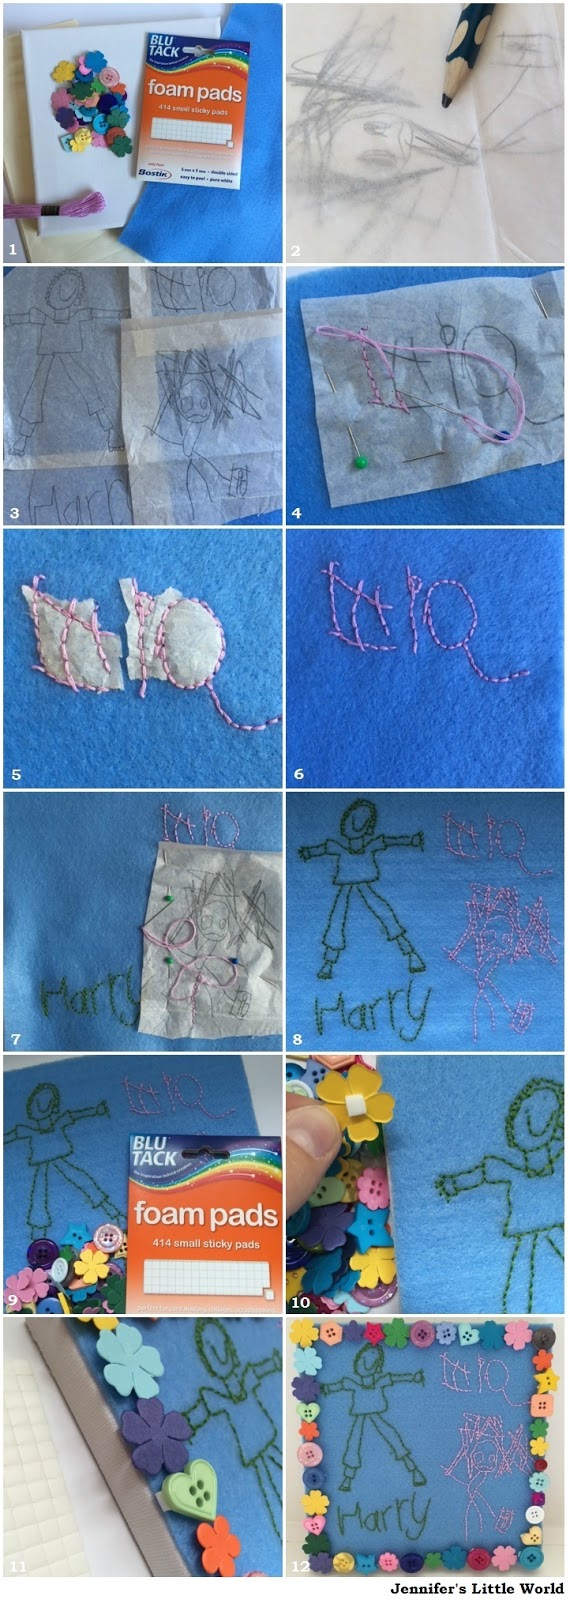 Embroidered keepsake canvas to make with children